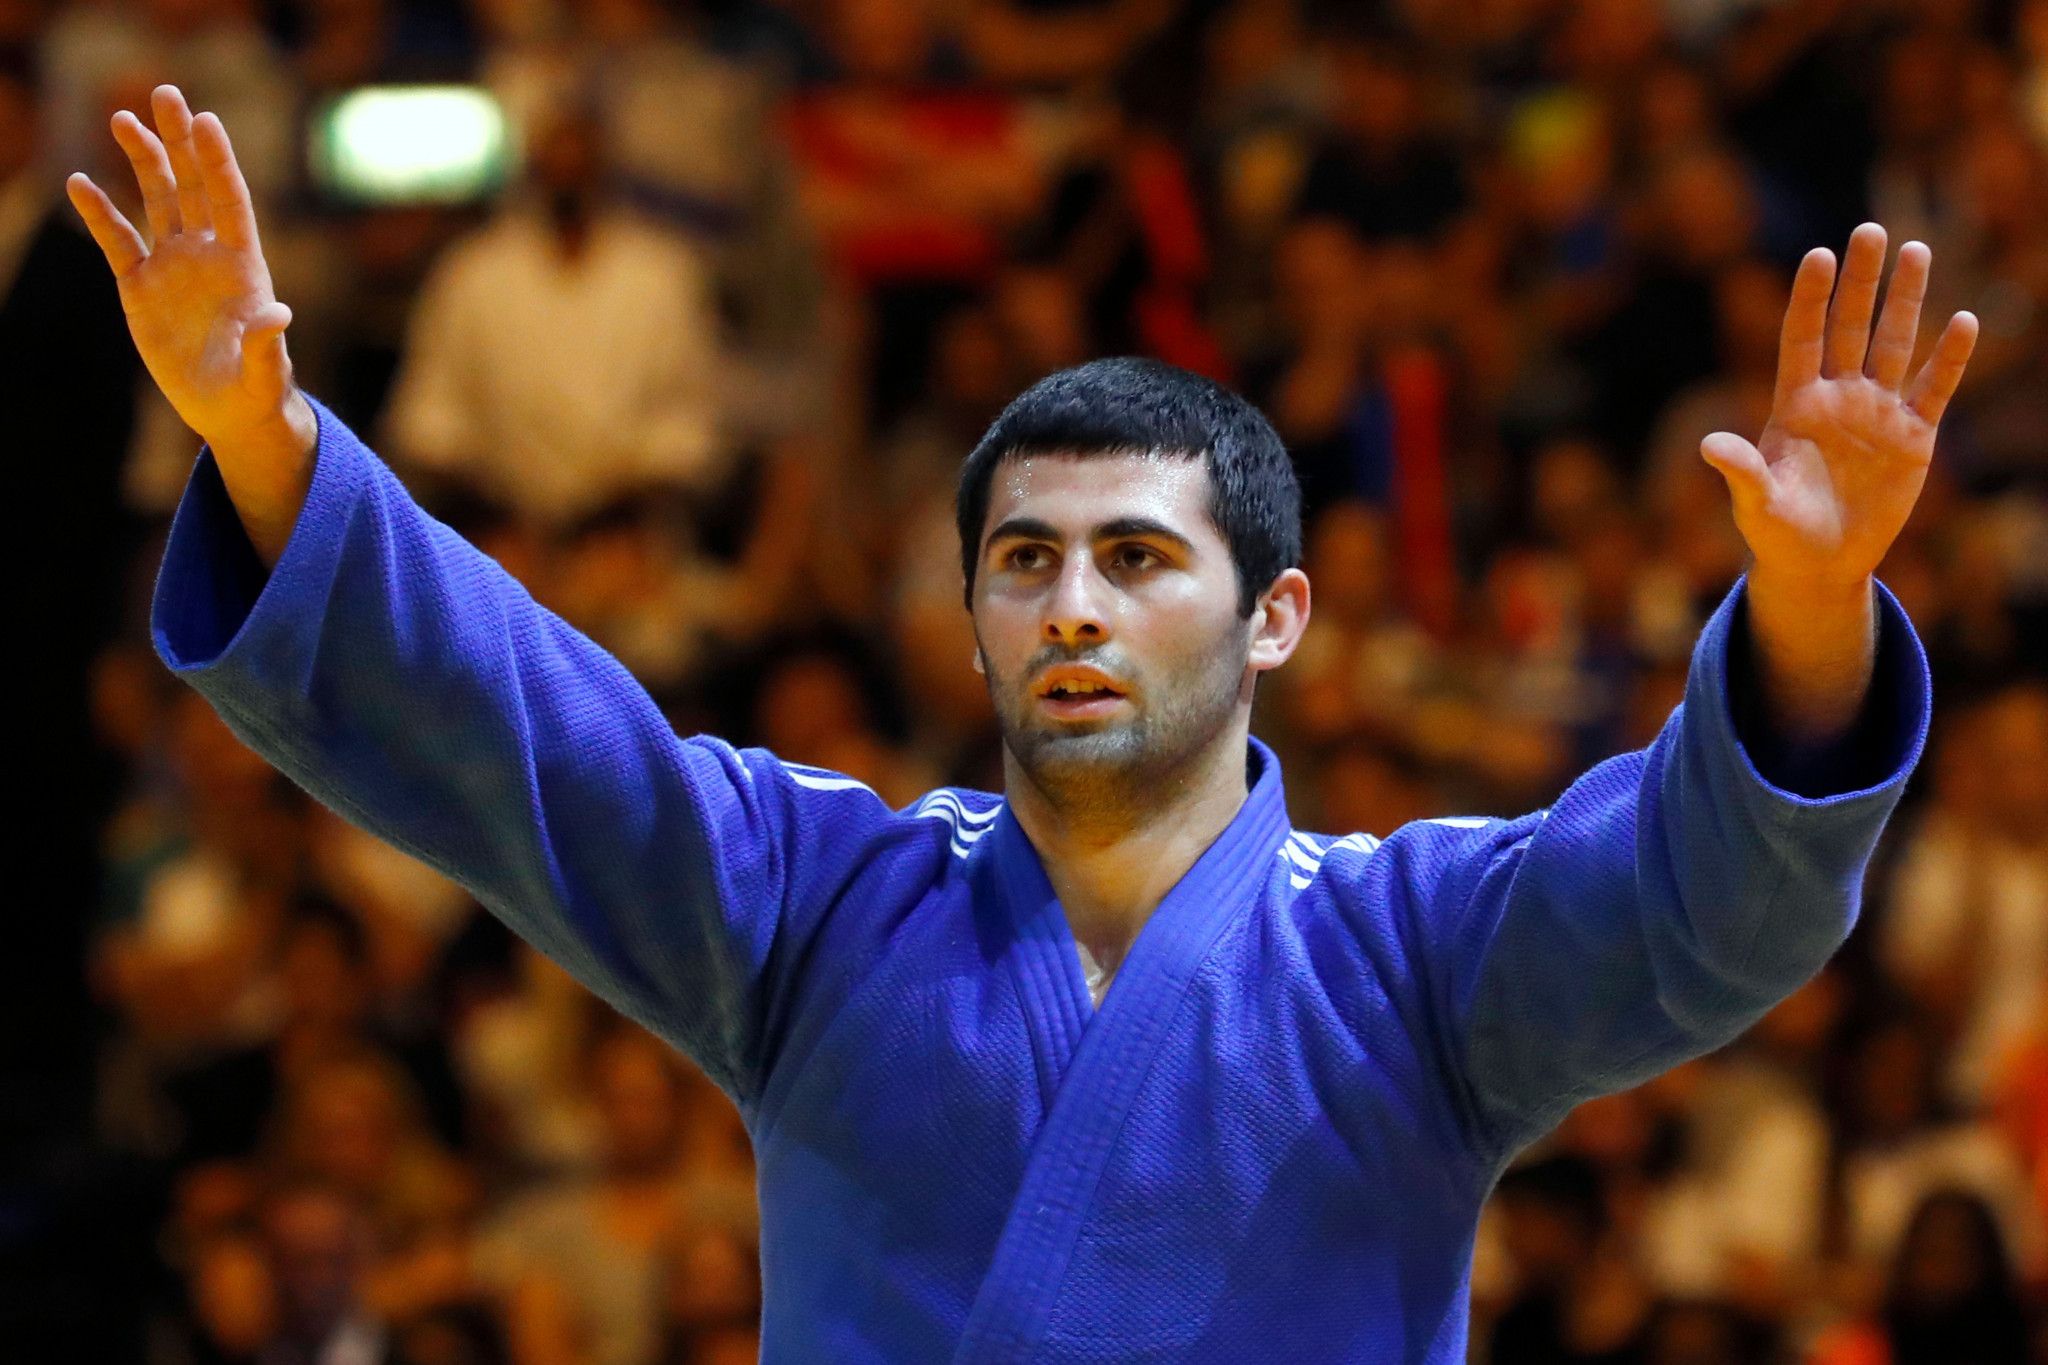 Russian judoka competing under IJF flag top medals table at Ulaanbaatar Grand Slam